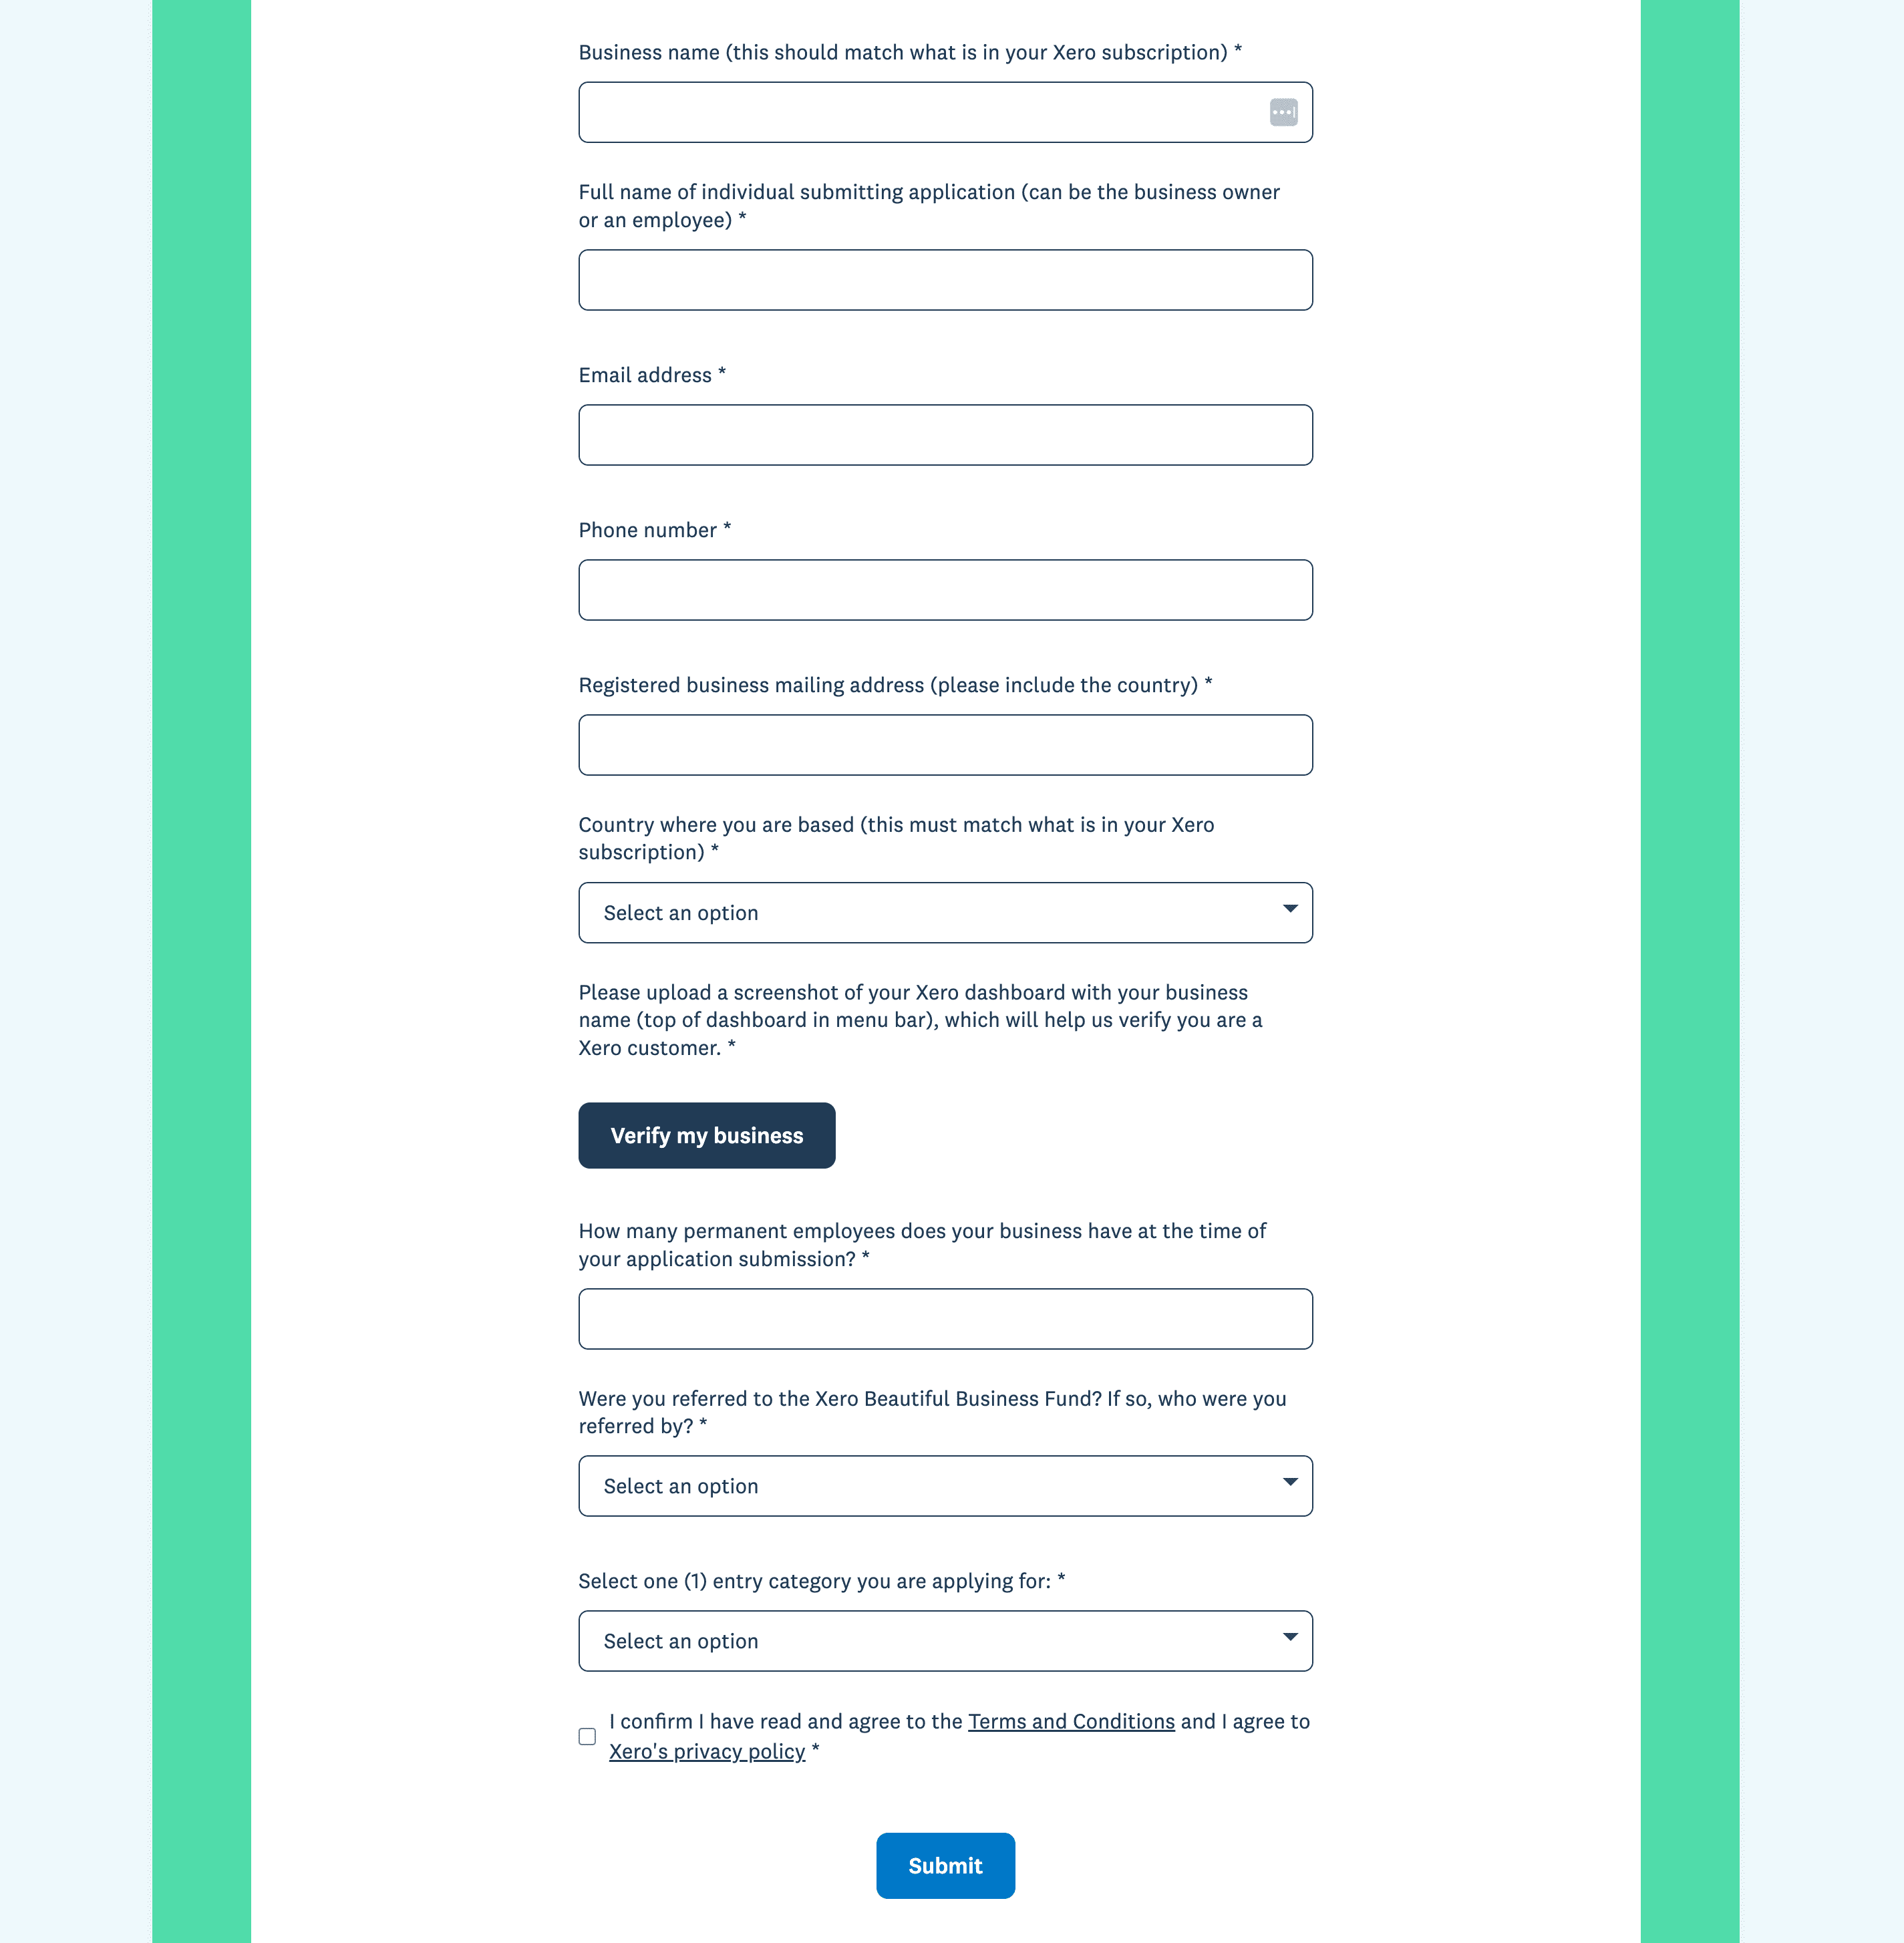 a screenshot of the application form fields